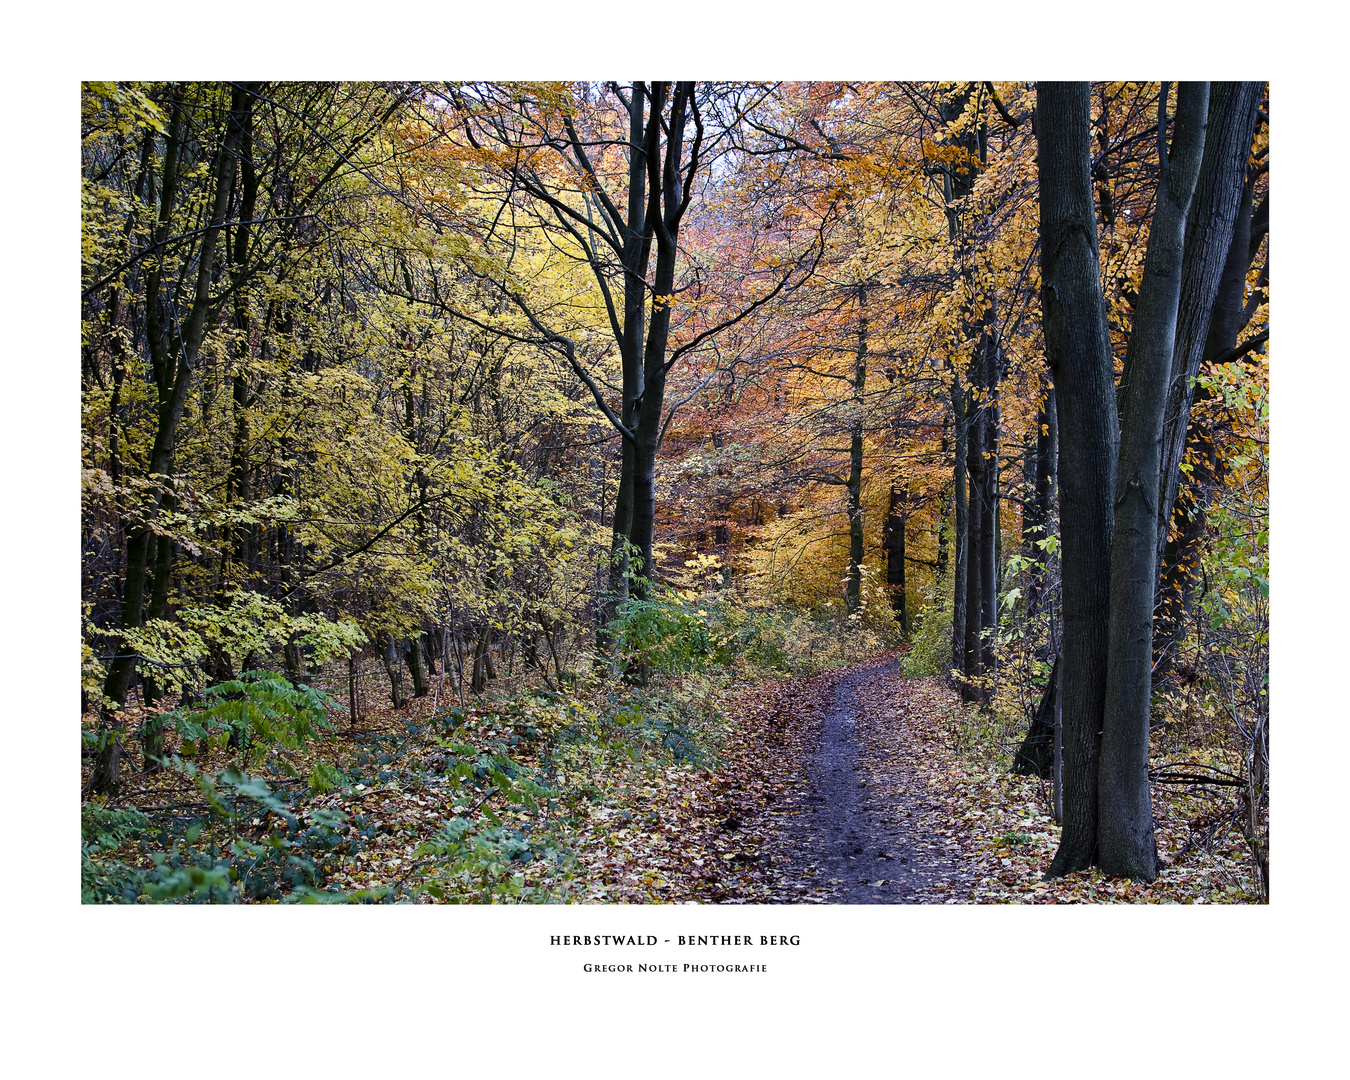 Herbstwald im Benther Berg